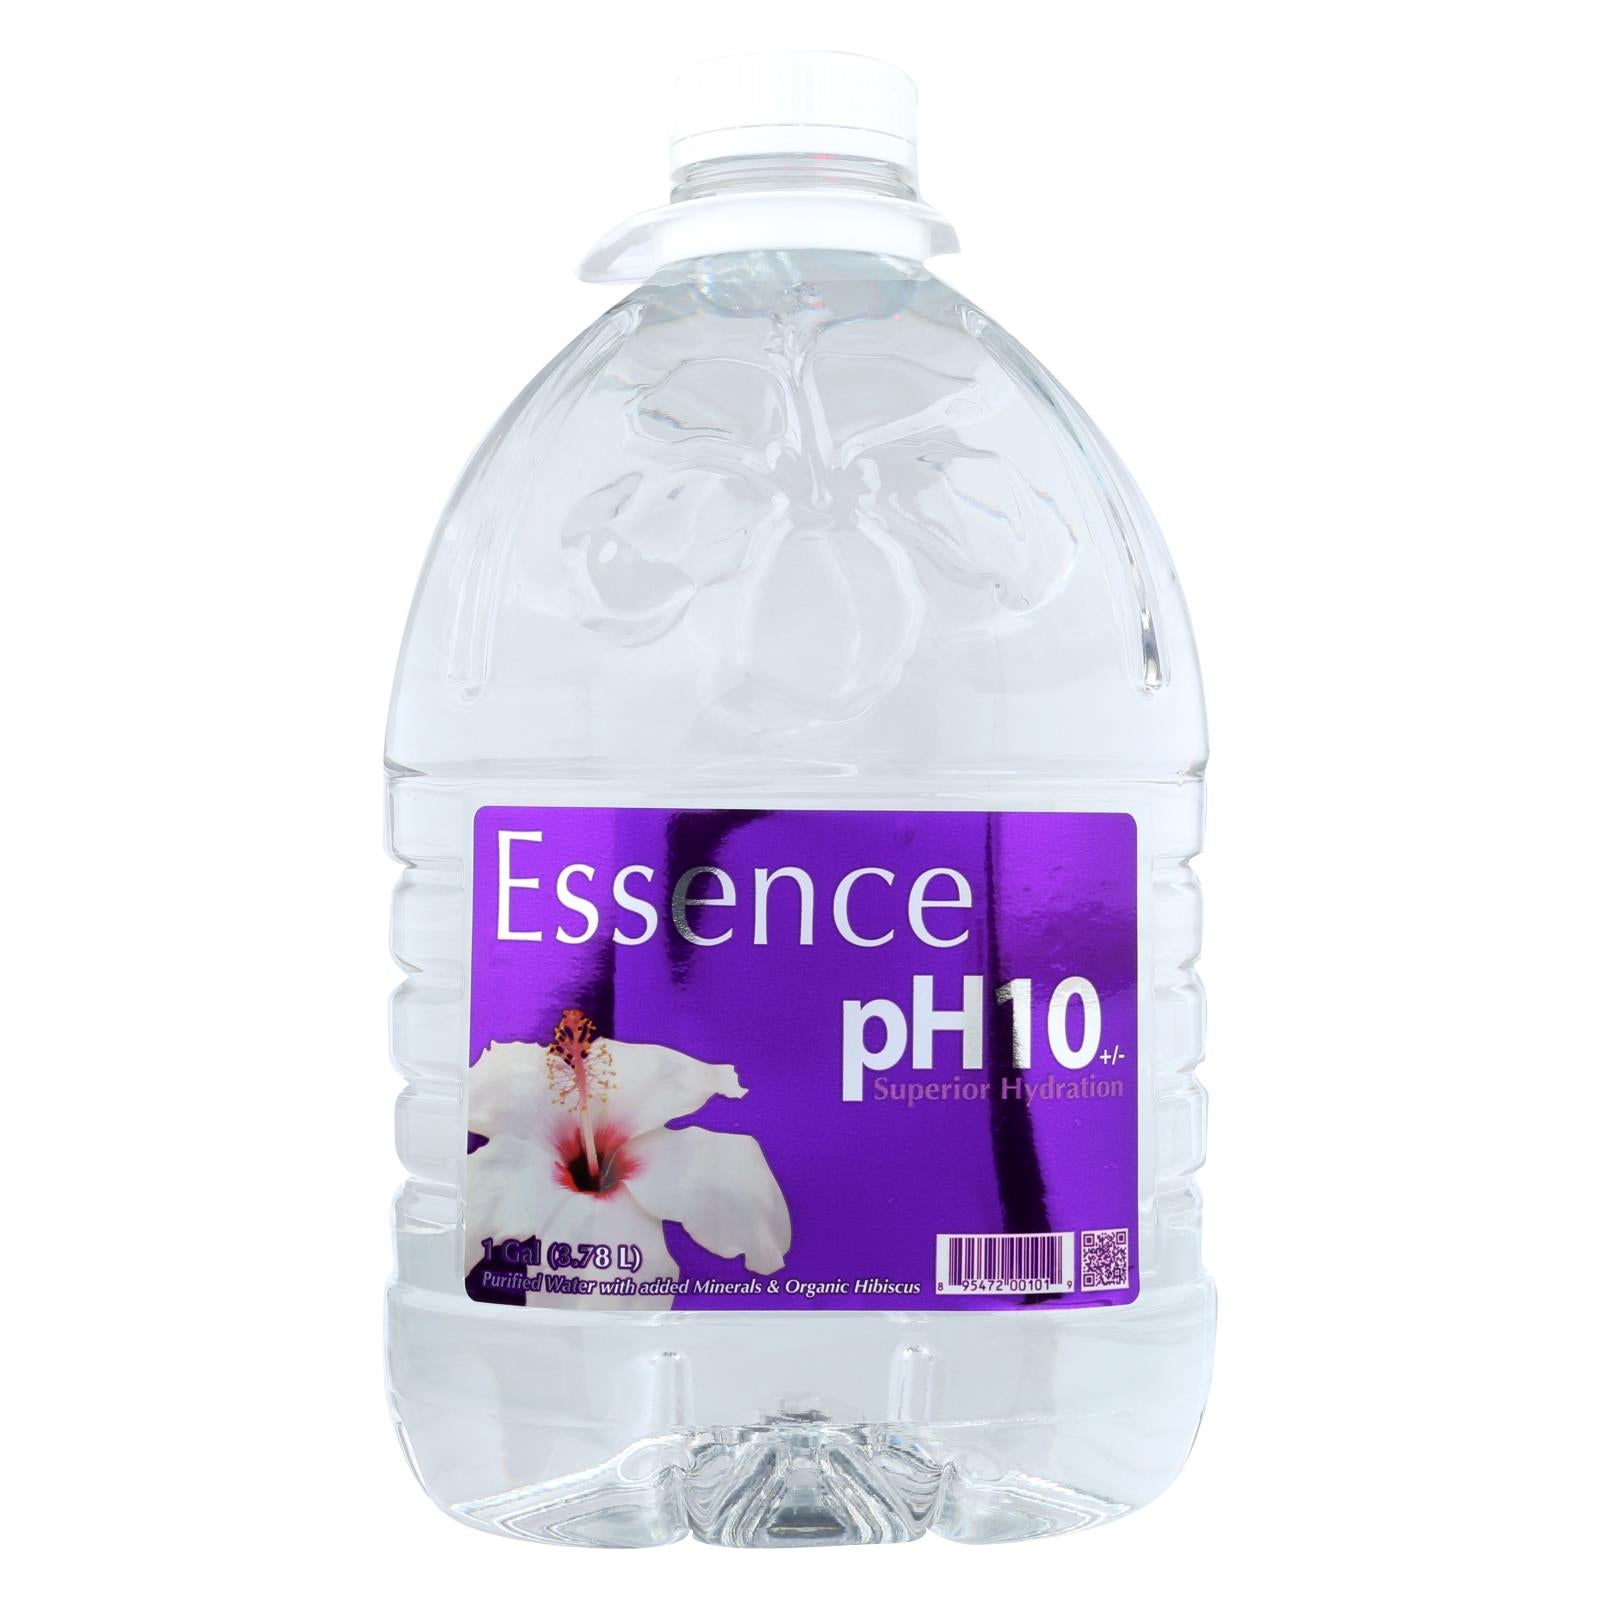 Essence, Essence Alkaline Water - Essence Ph10 Water - Gallon - Case of 4 - 1 Gal (Pack of 4)